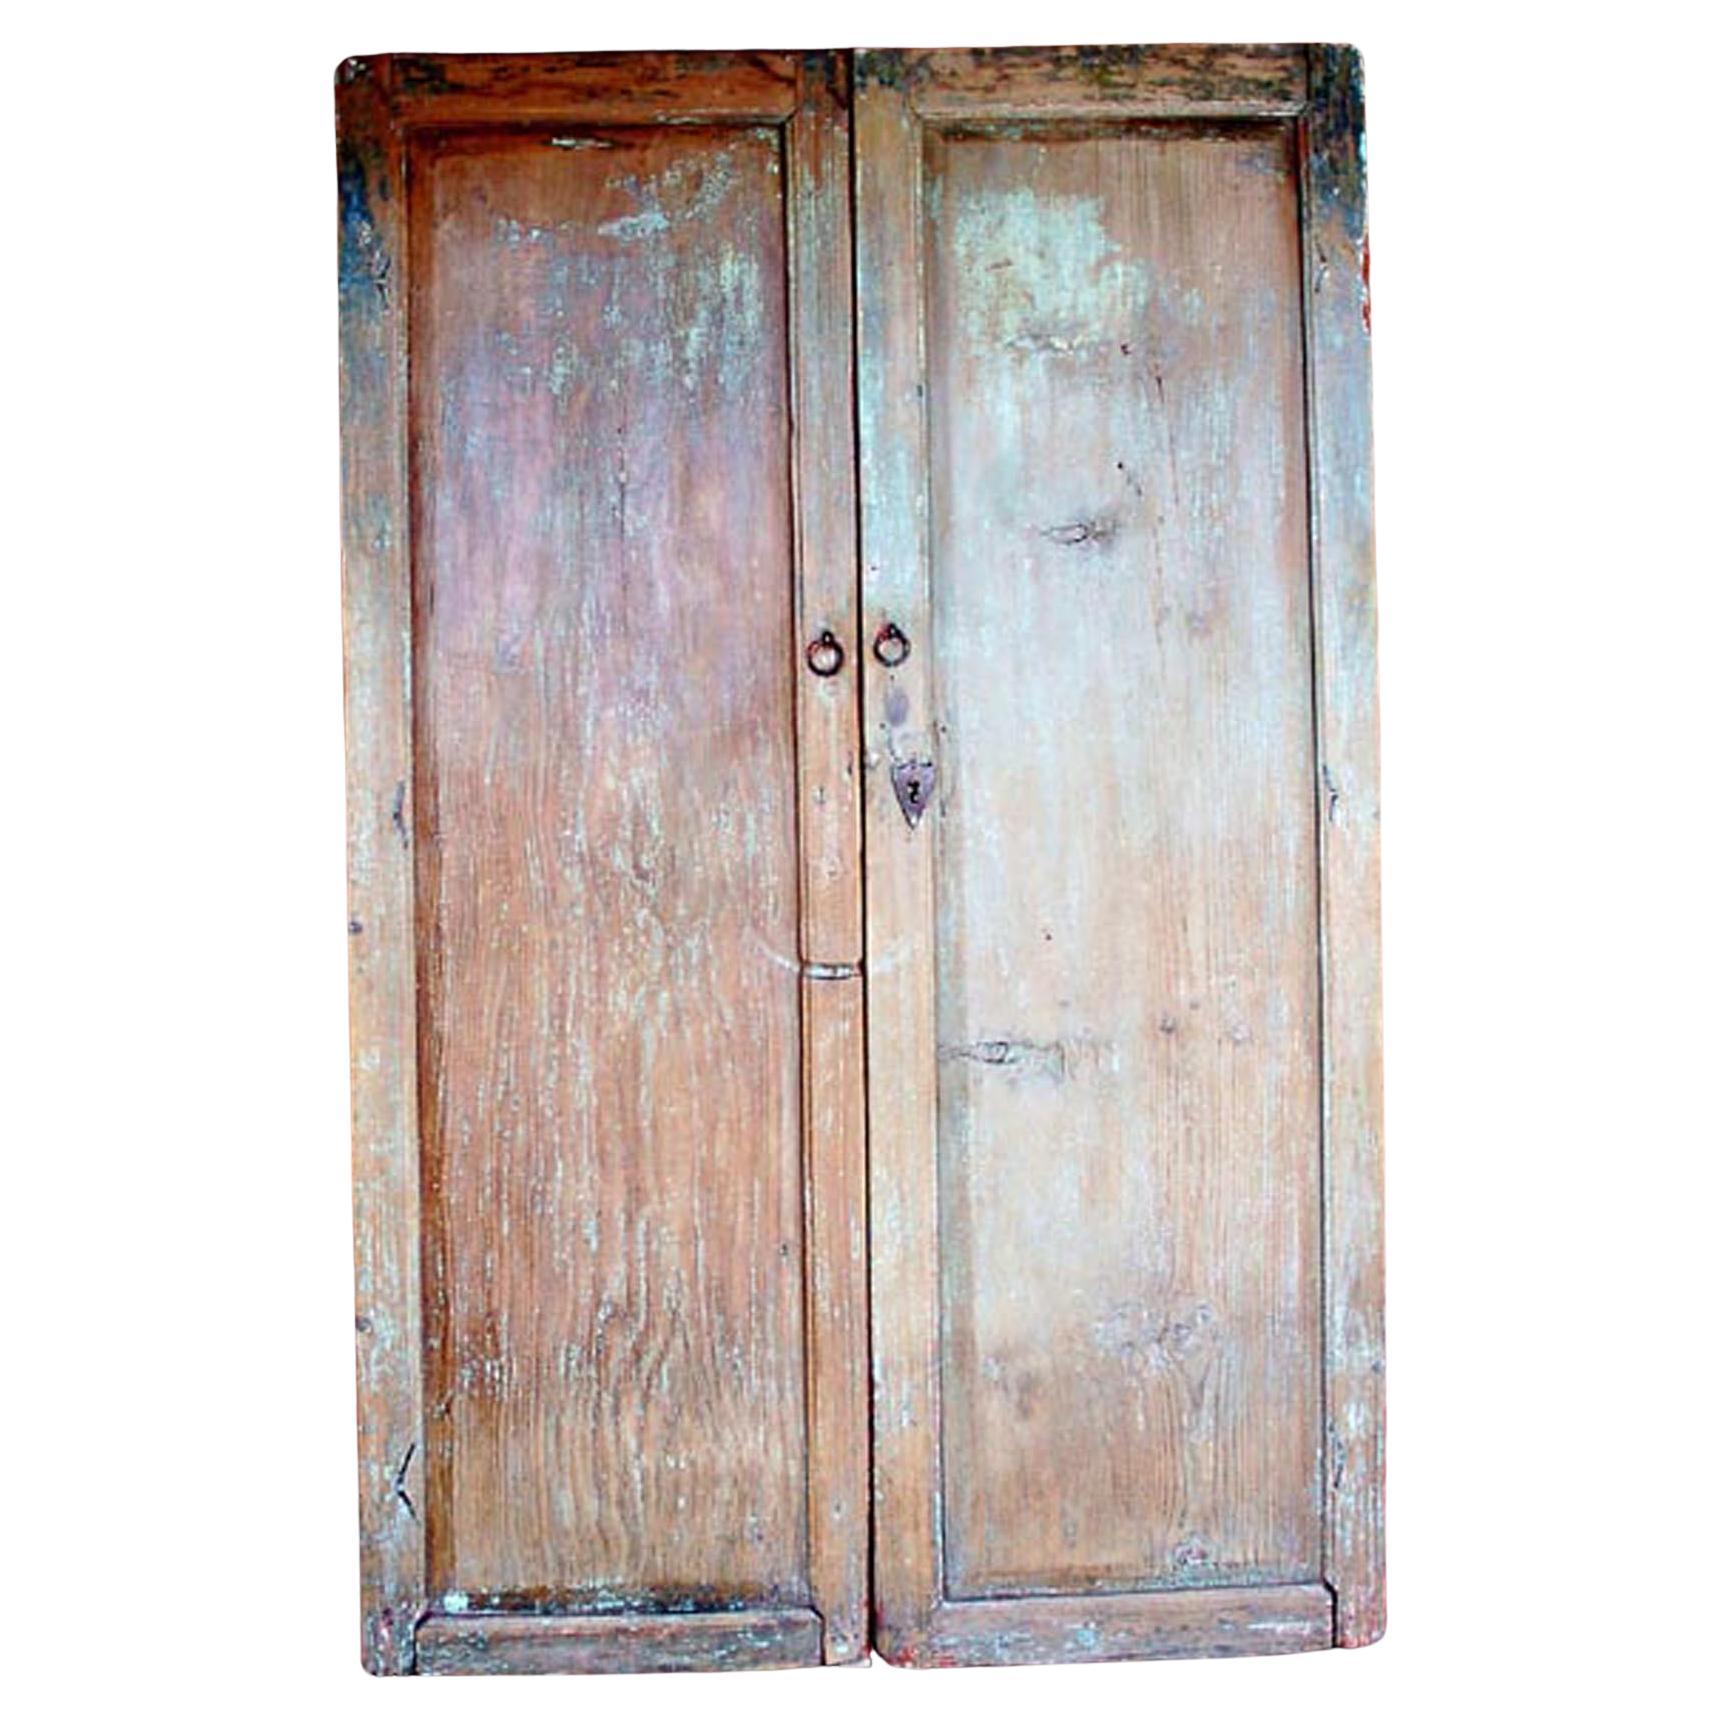 Pair of 19th Century Doors